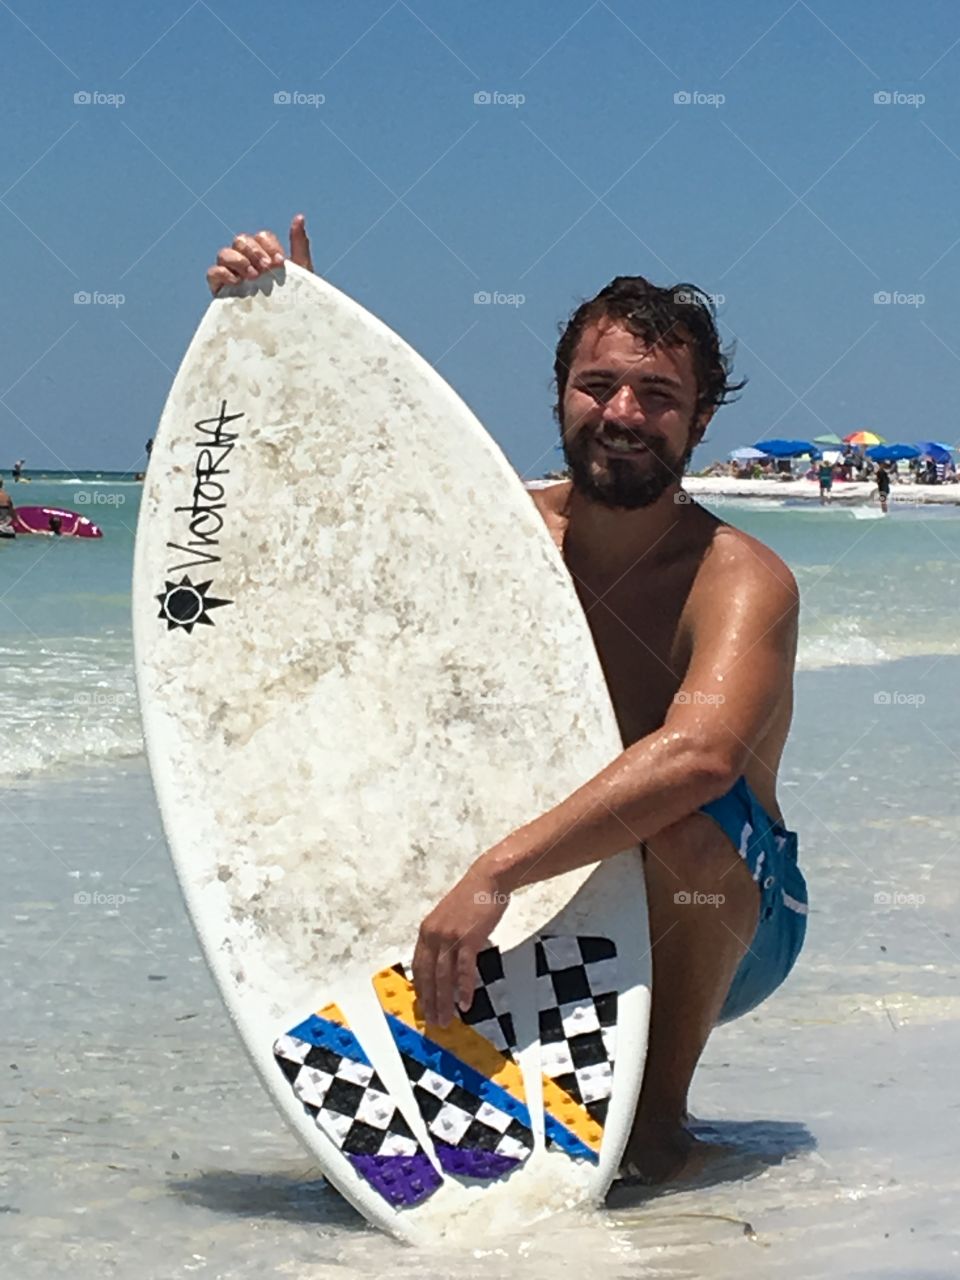 Skim board surfer